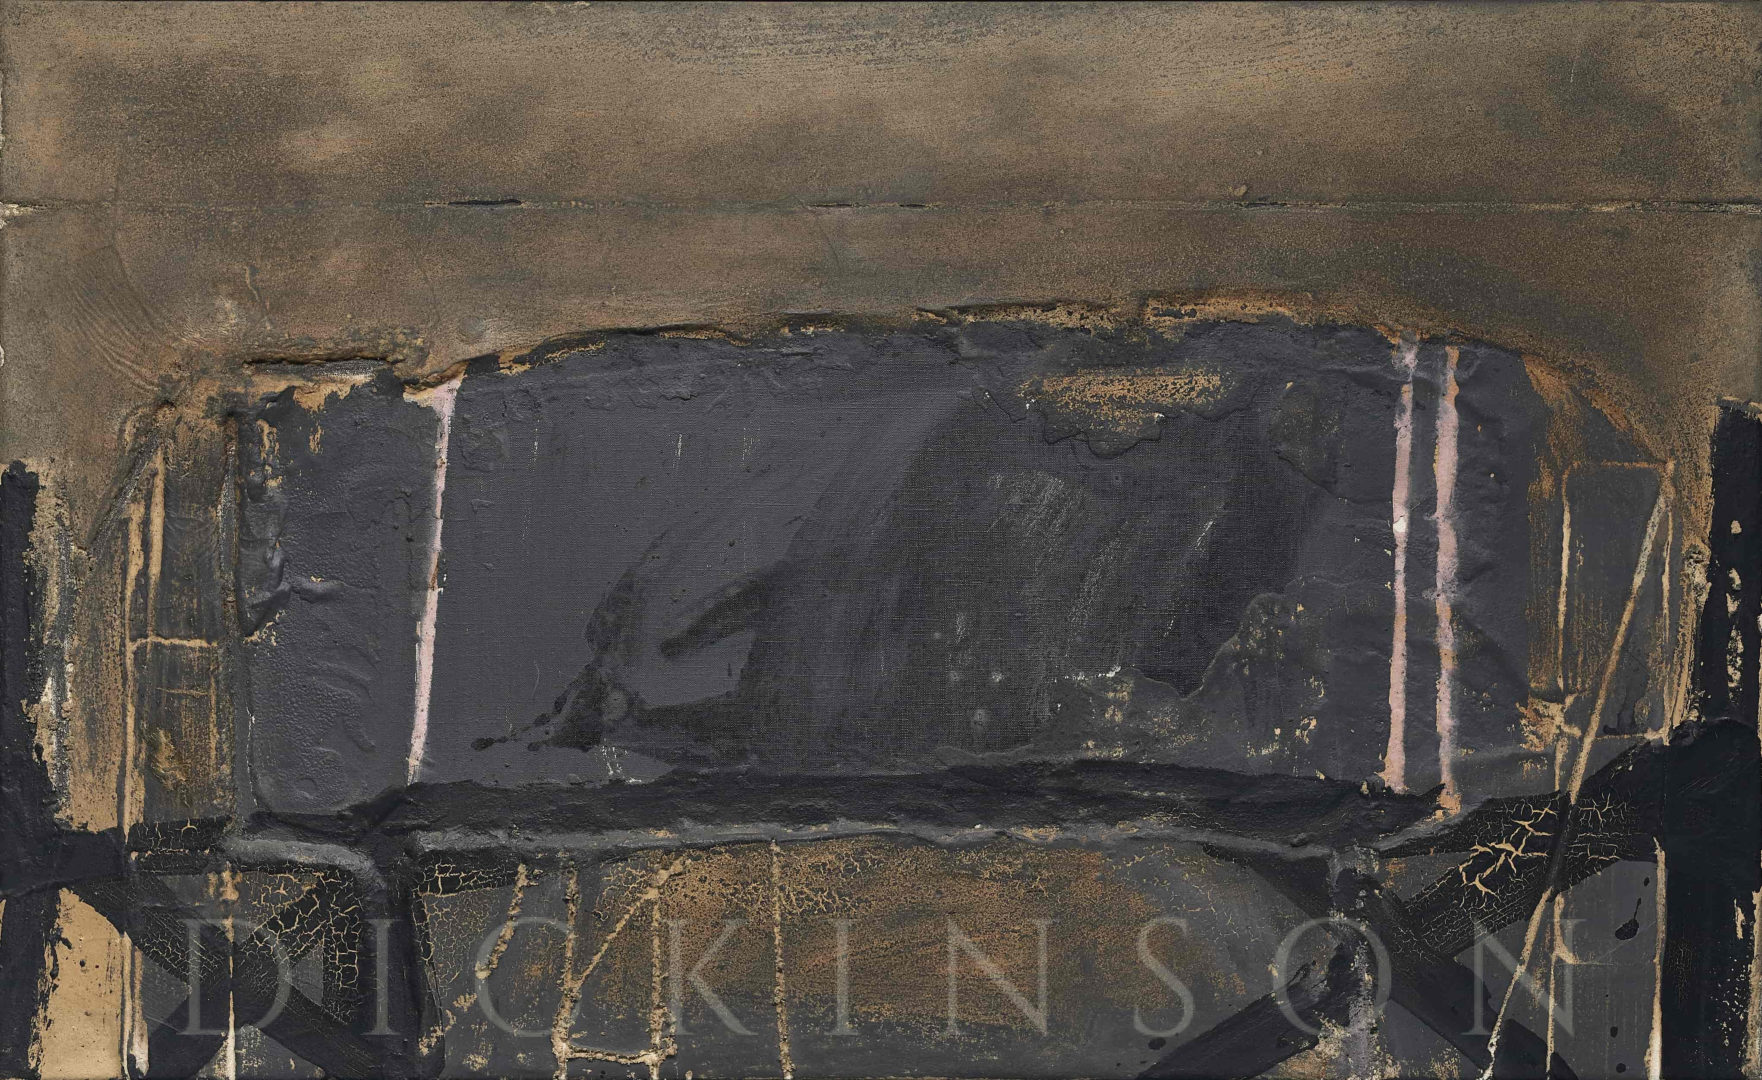 Antoni TÀPIES (1923 – 2012), Gray with three pink lines, 1964